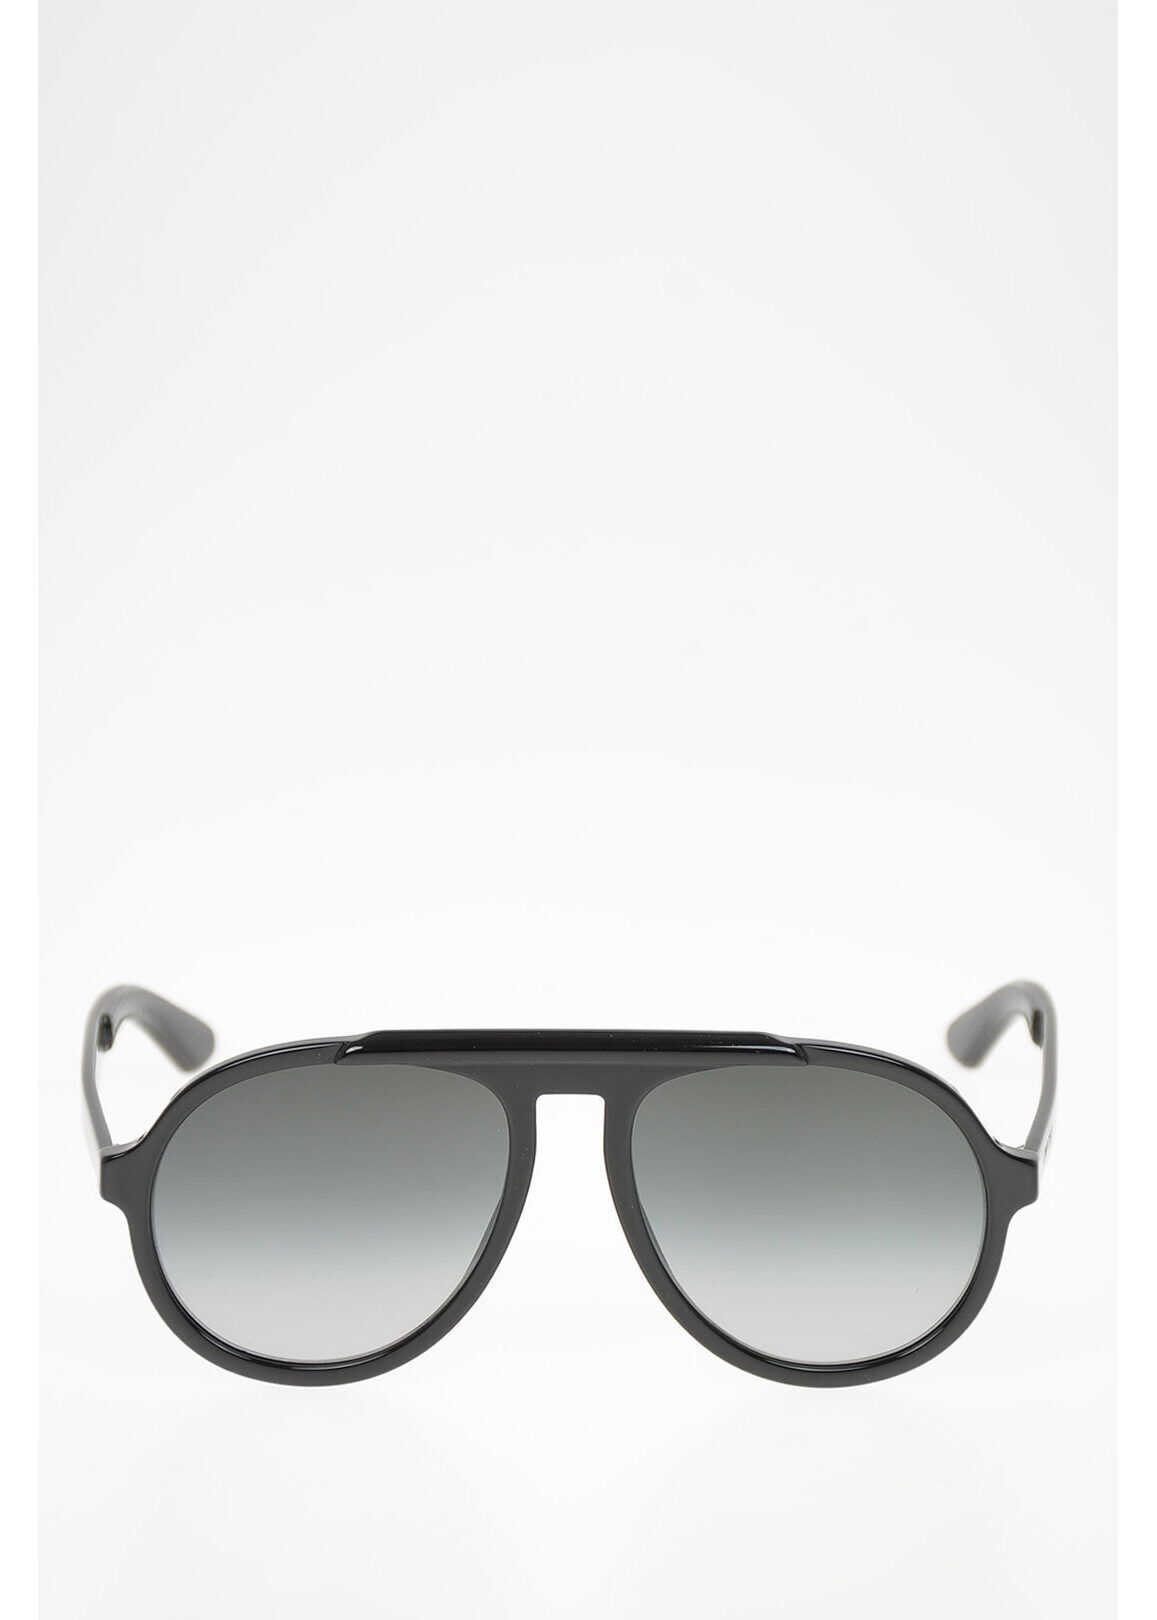 Jimmy Choo Full Rim Universal Fit Sunglasses Black